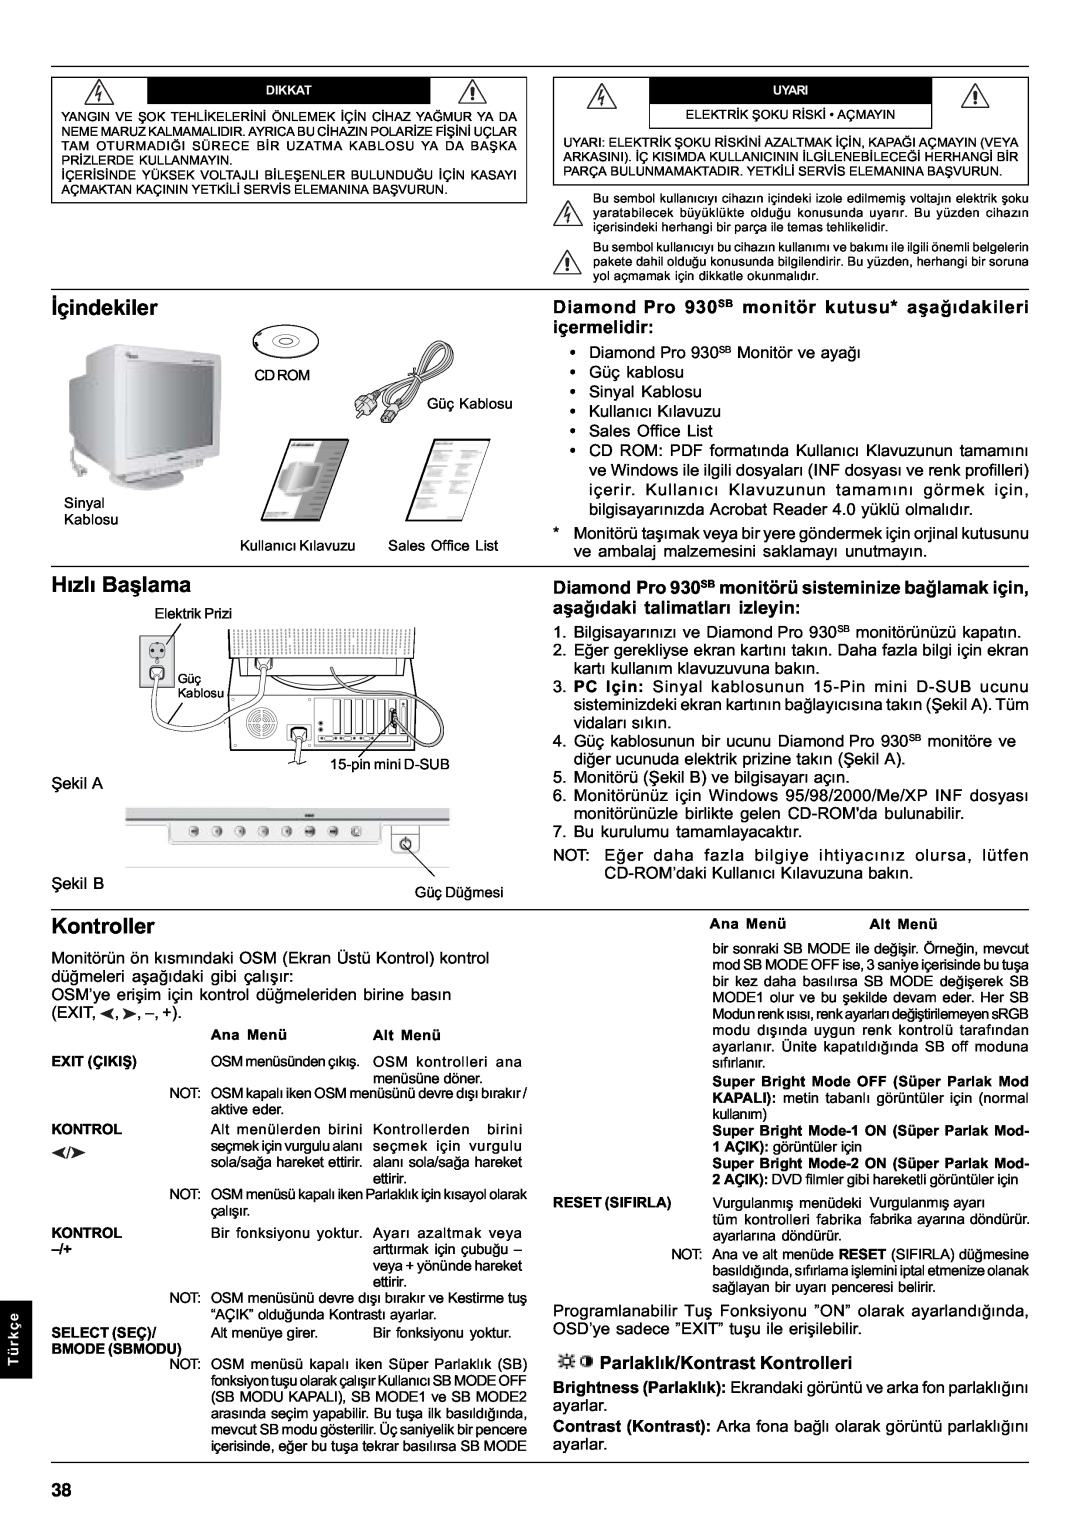 Mitsubishi Electronics Pro 930SB user manual Ýçindekiler, Hýzlý Baþlama, Kontroller, aþaðýdaki talimatlarý izleyin 